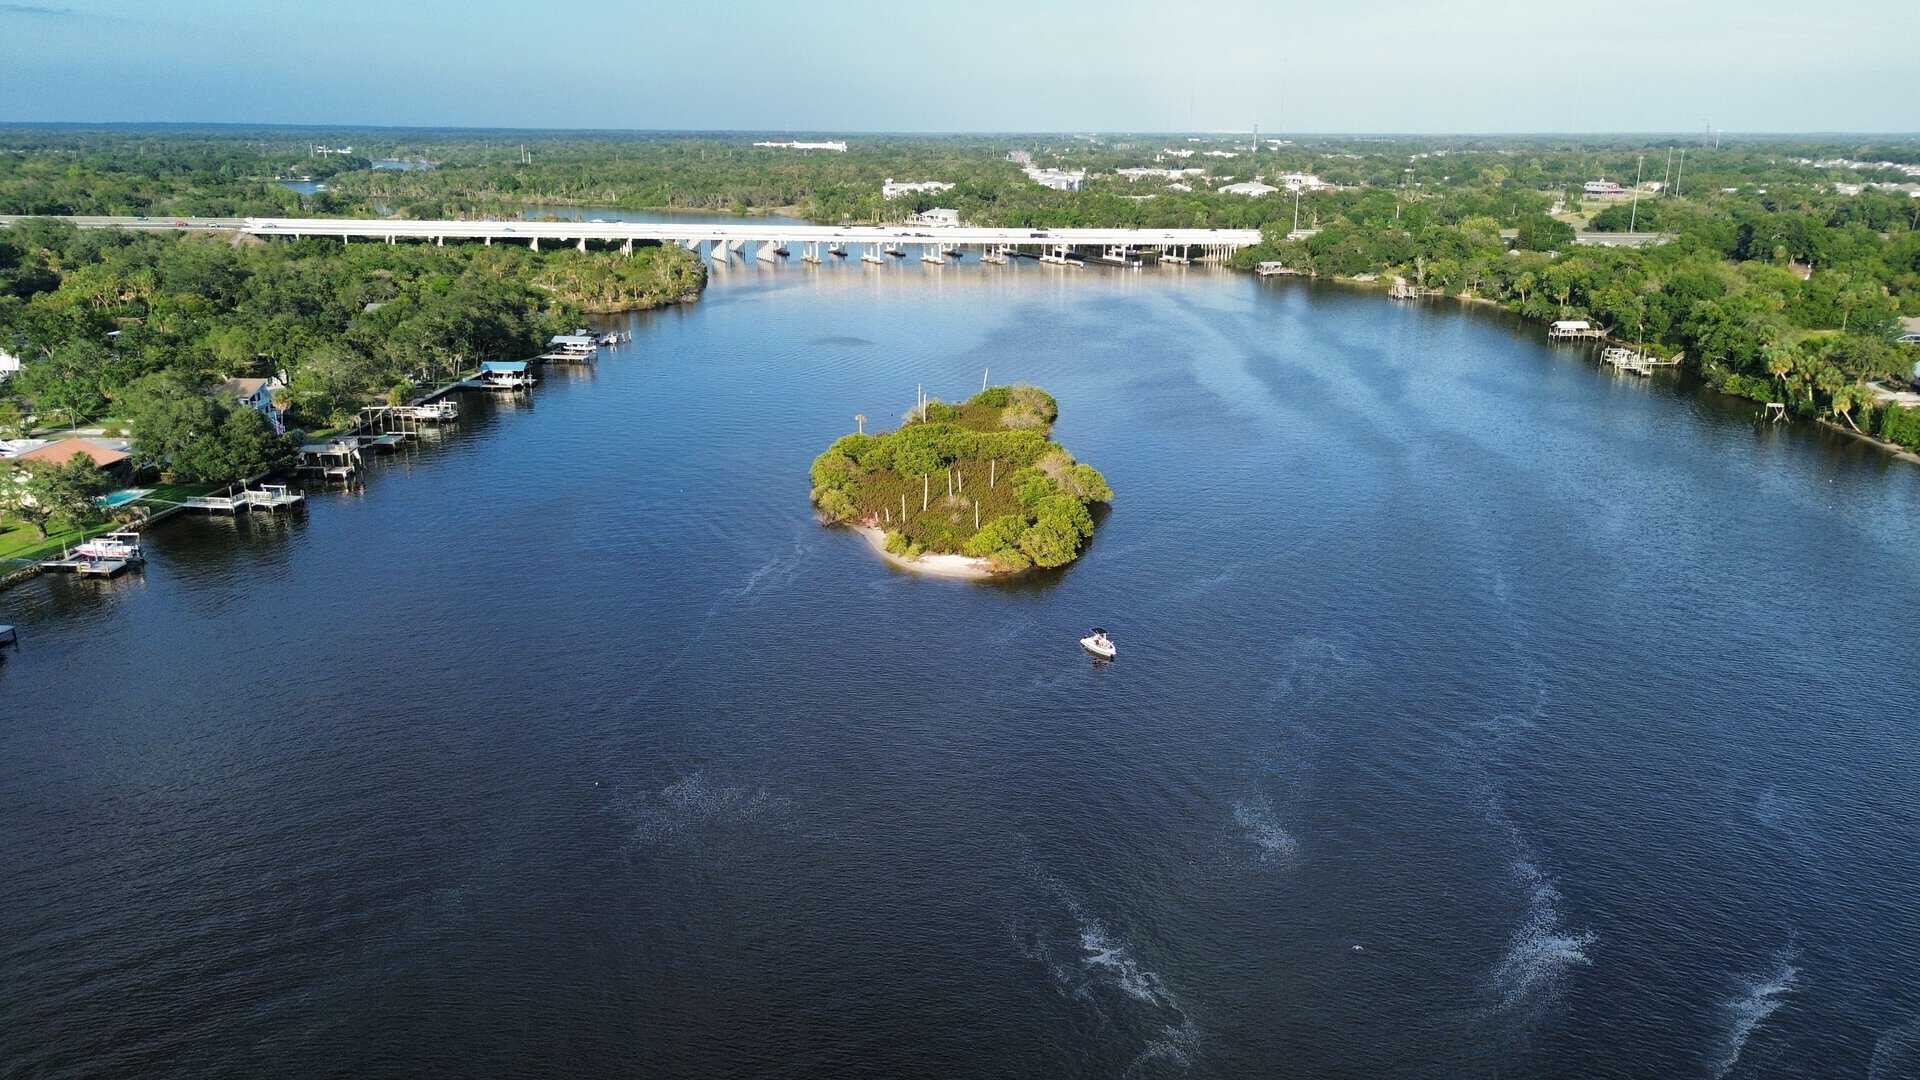 Drone view of the Alafia River in Riverview, Florida